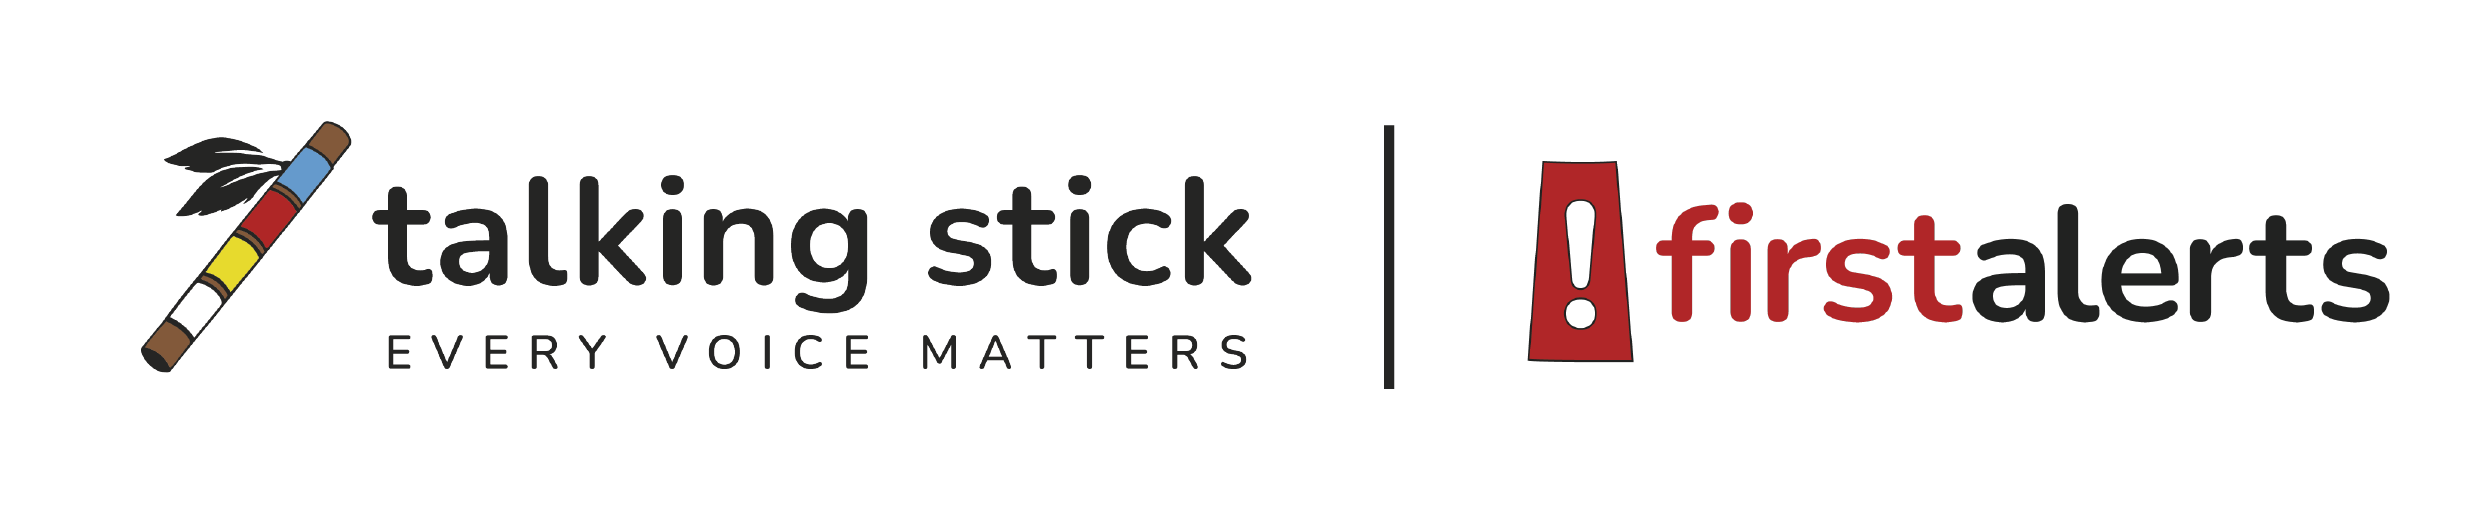 TalkingStick_FirstAlerts_Logos.png